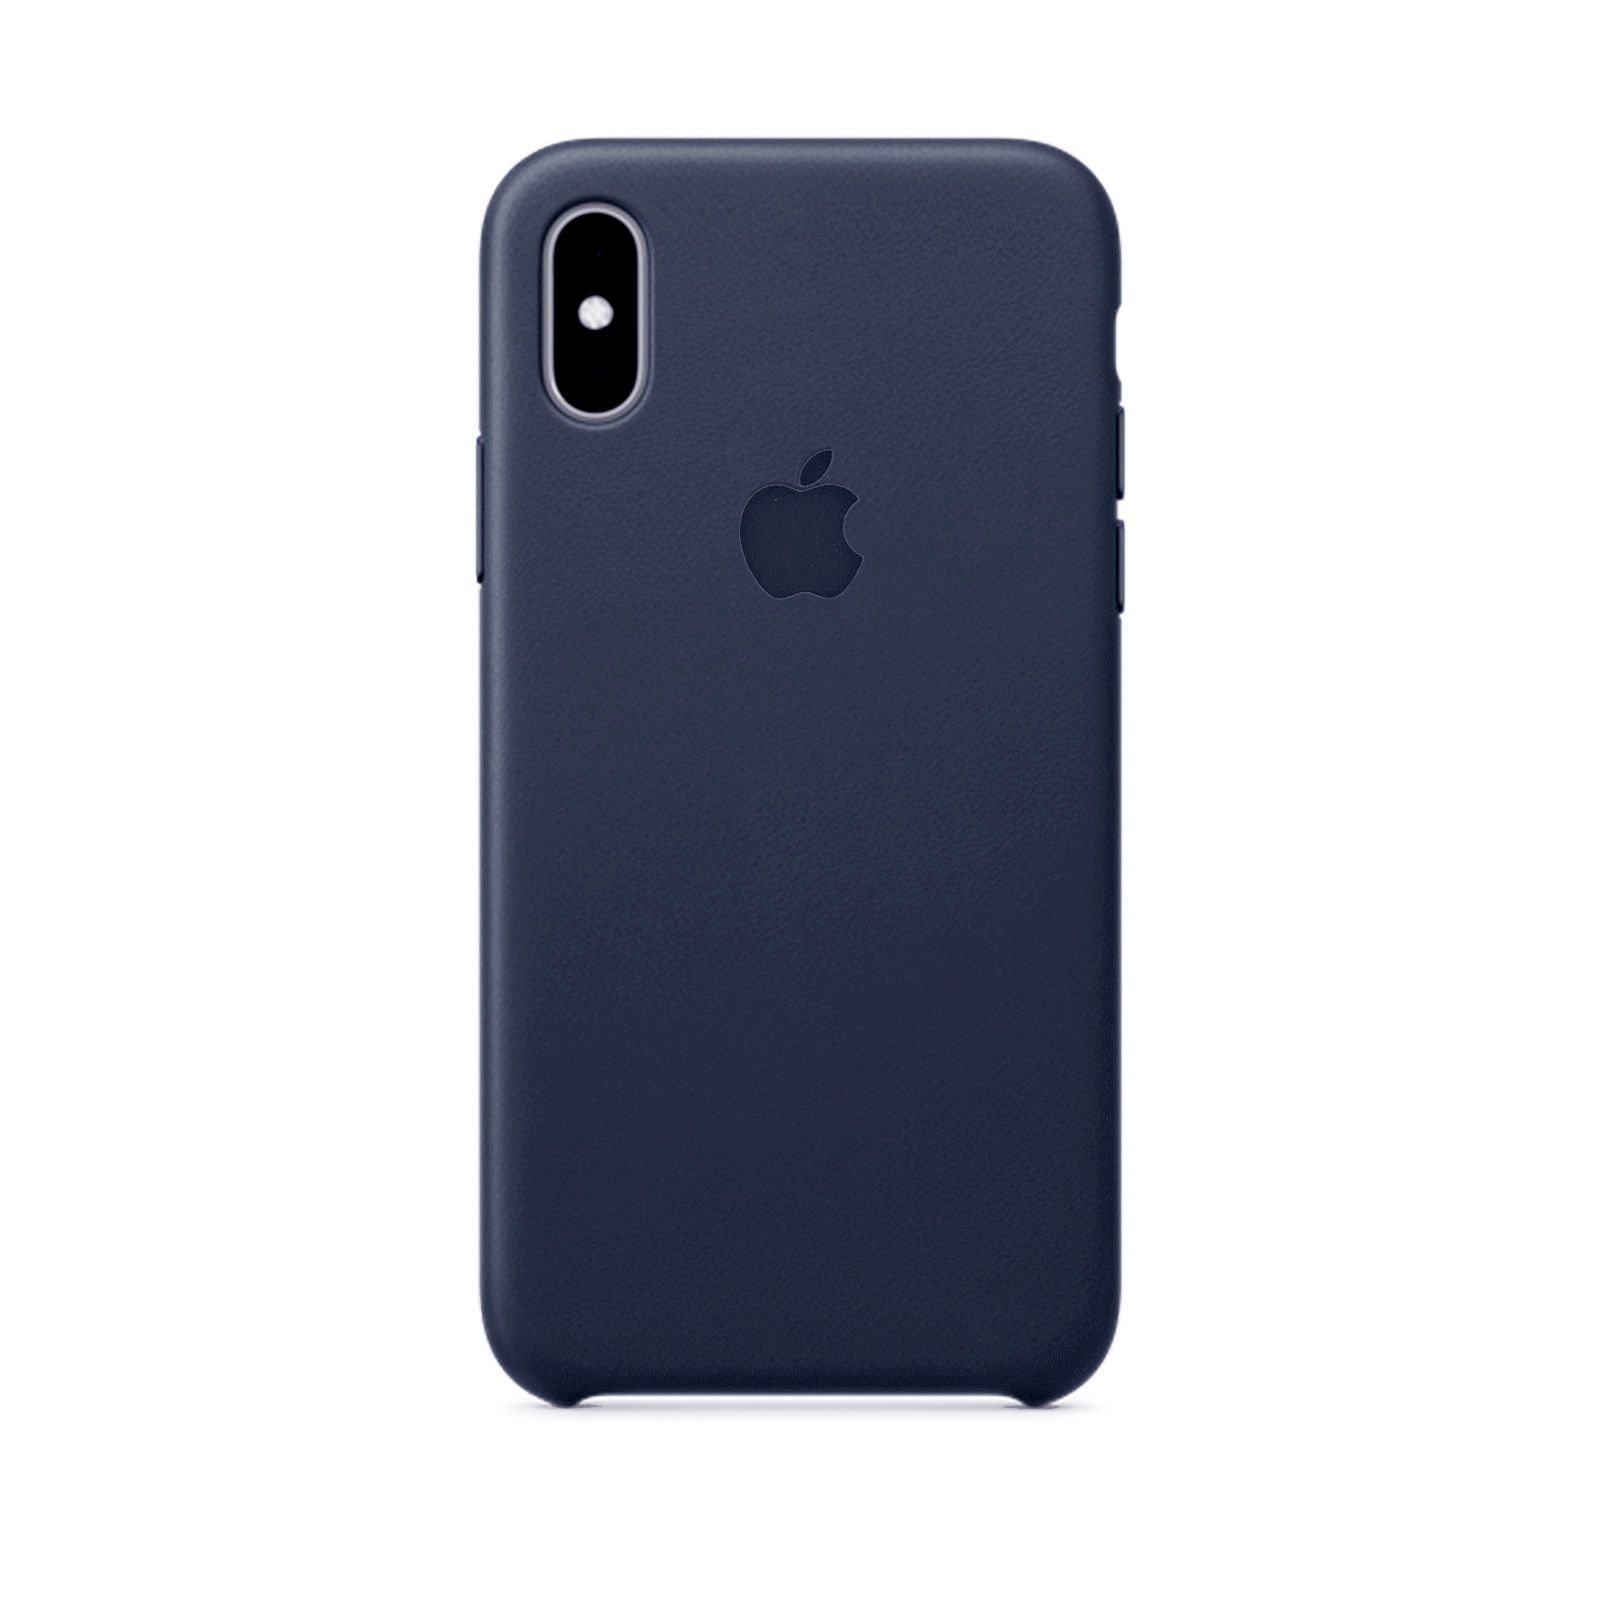 Capa Iphone XR Silicone Case Apple Azul Escuro - Chic Outlet - Economize  com estilo!